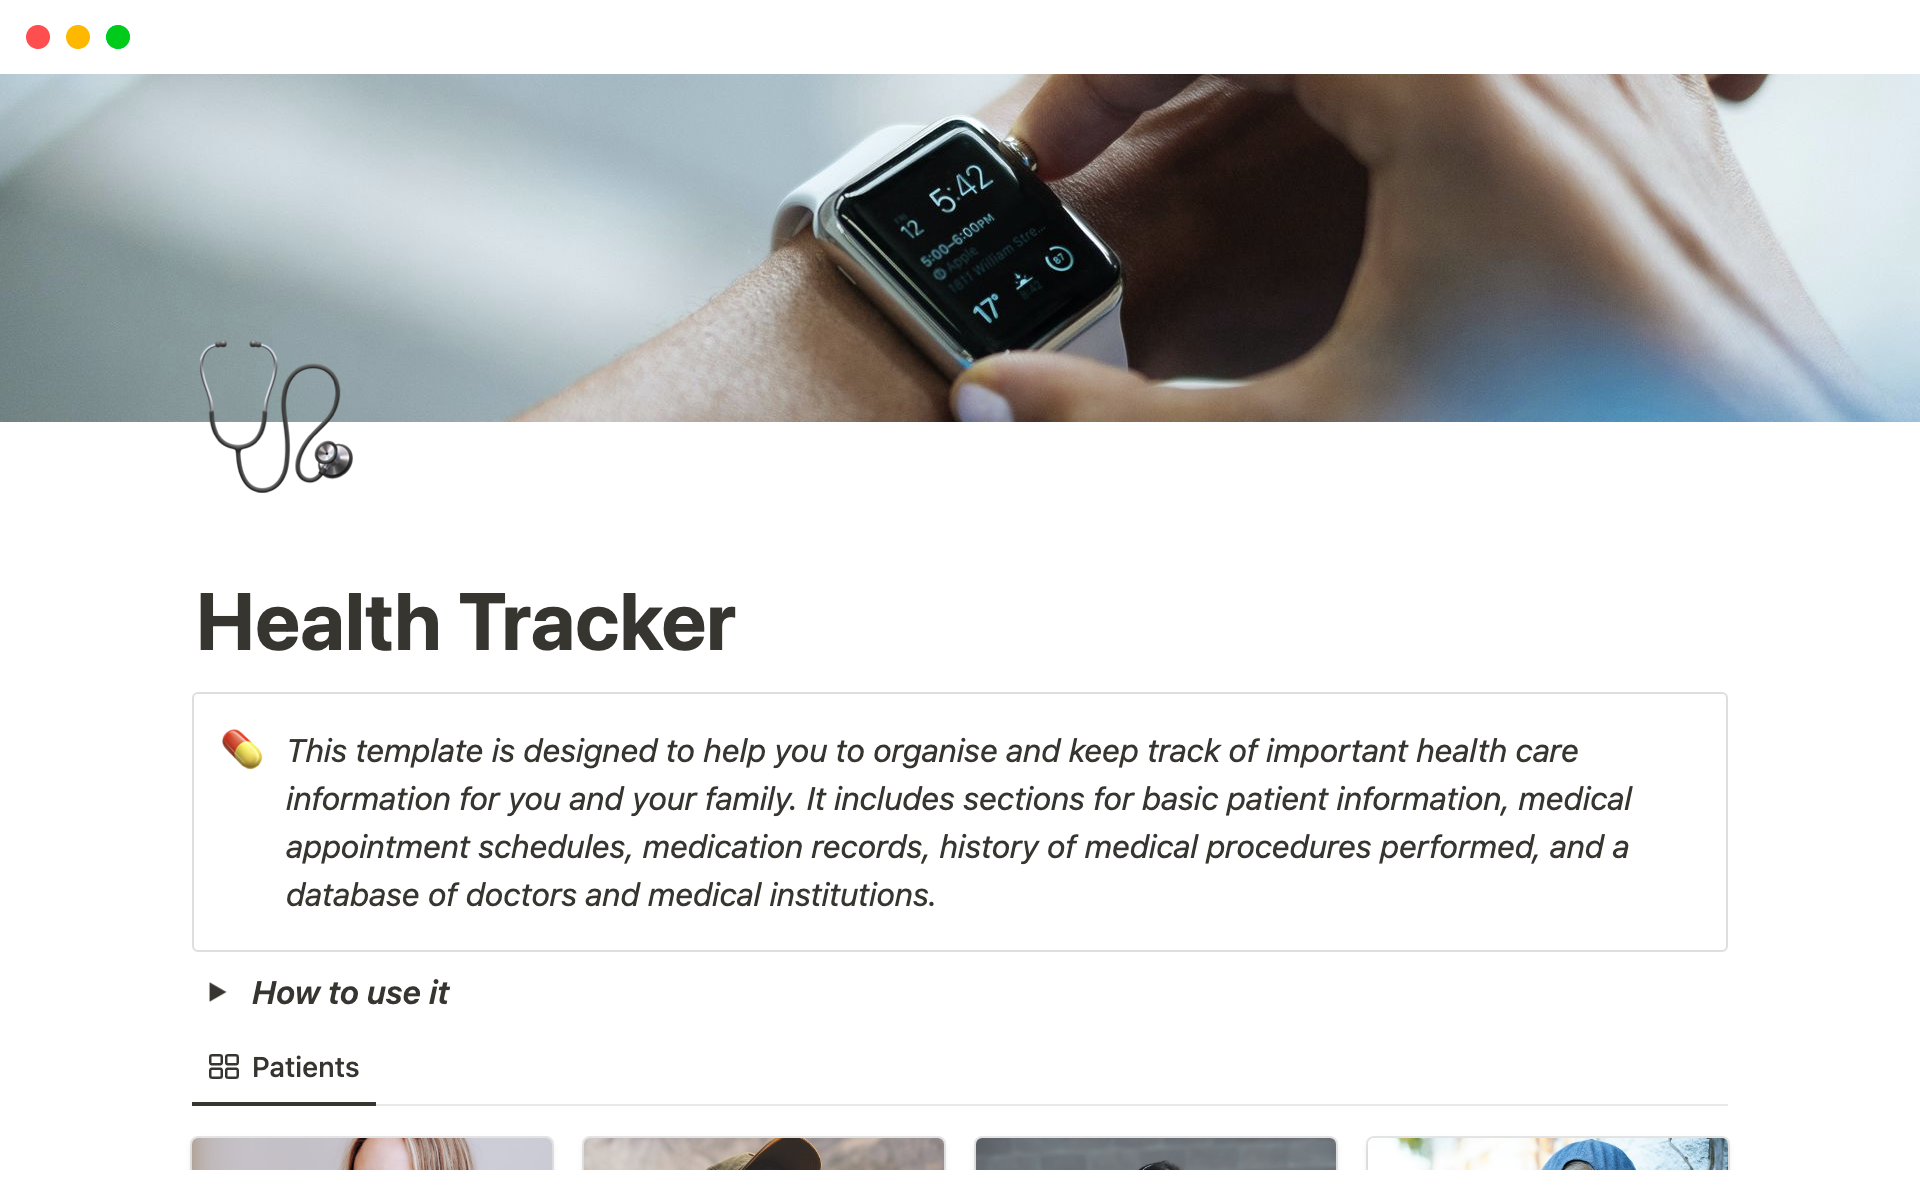 Aperçu du modèle de Health Tracker